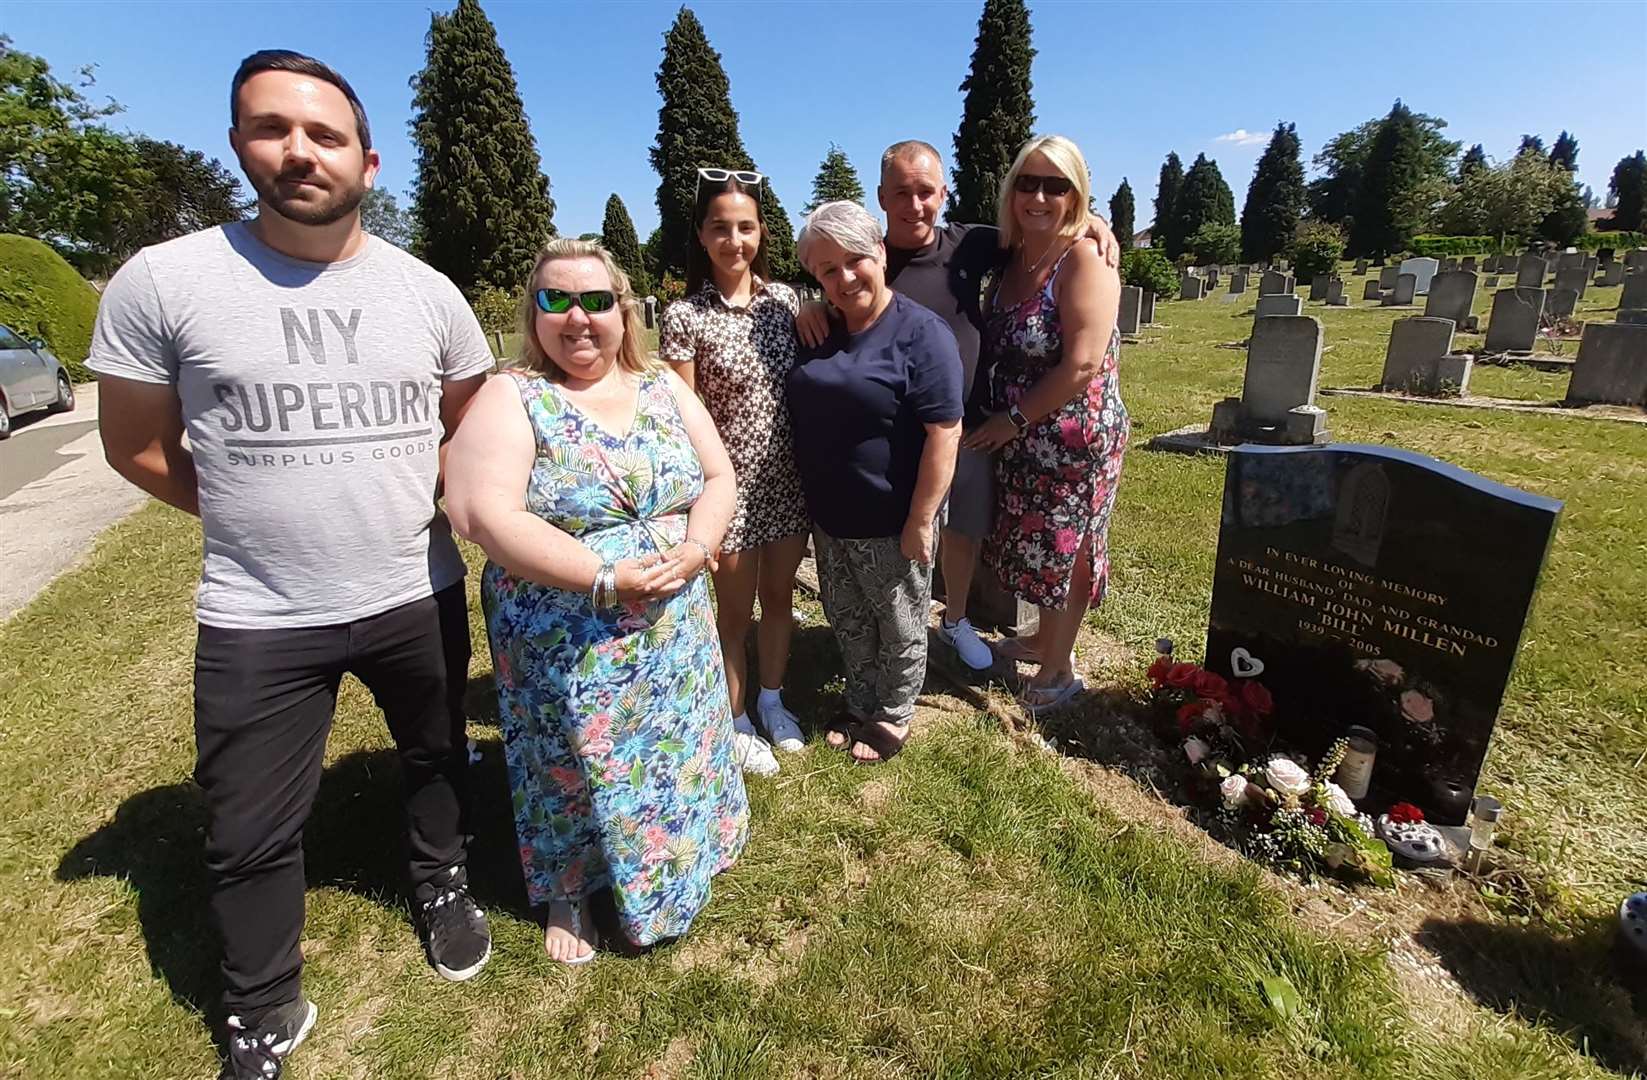 Bill Millen junior, Karen Millen, Morgan Prothero, Claire Sharp, Stephen Cullen and Anna Cullen by Bill Millen's grave in Maidstone Cemetery